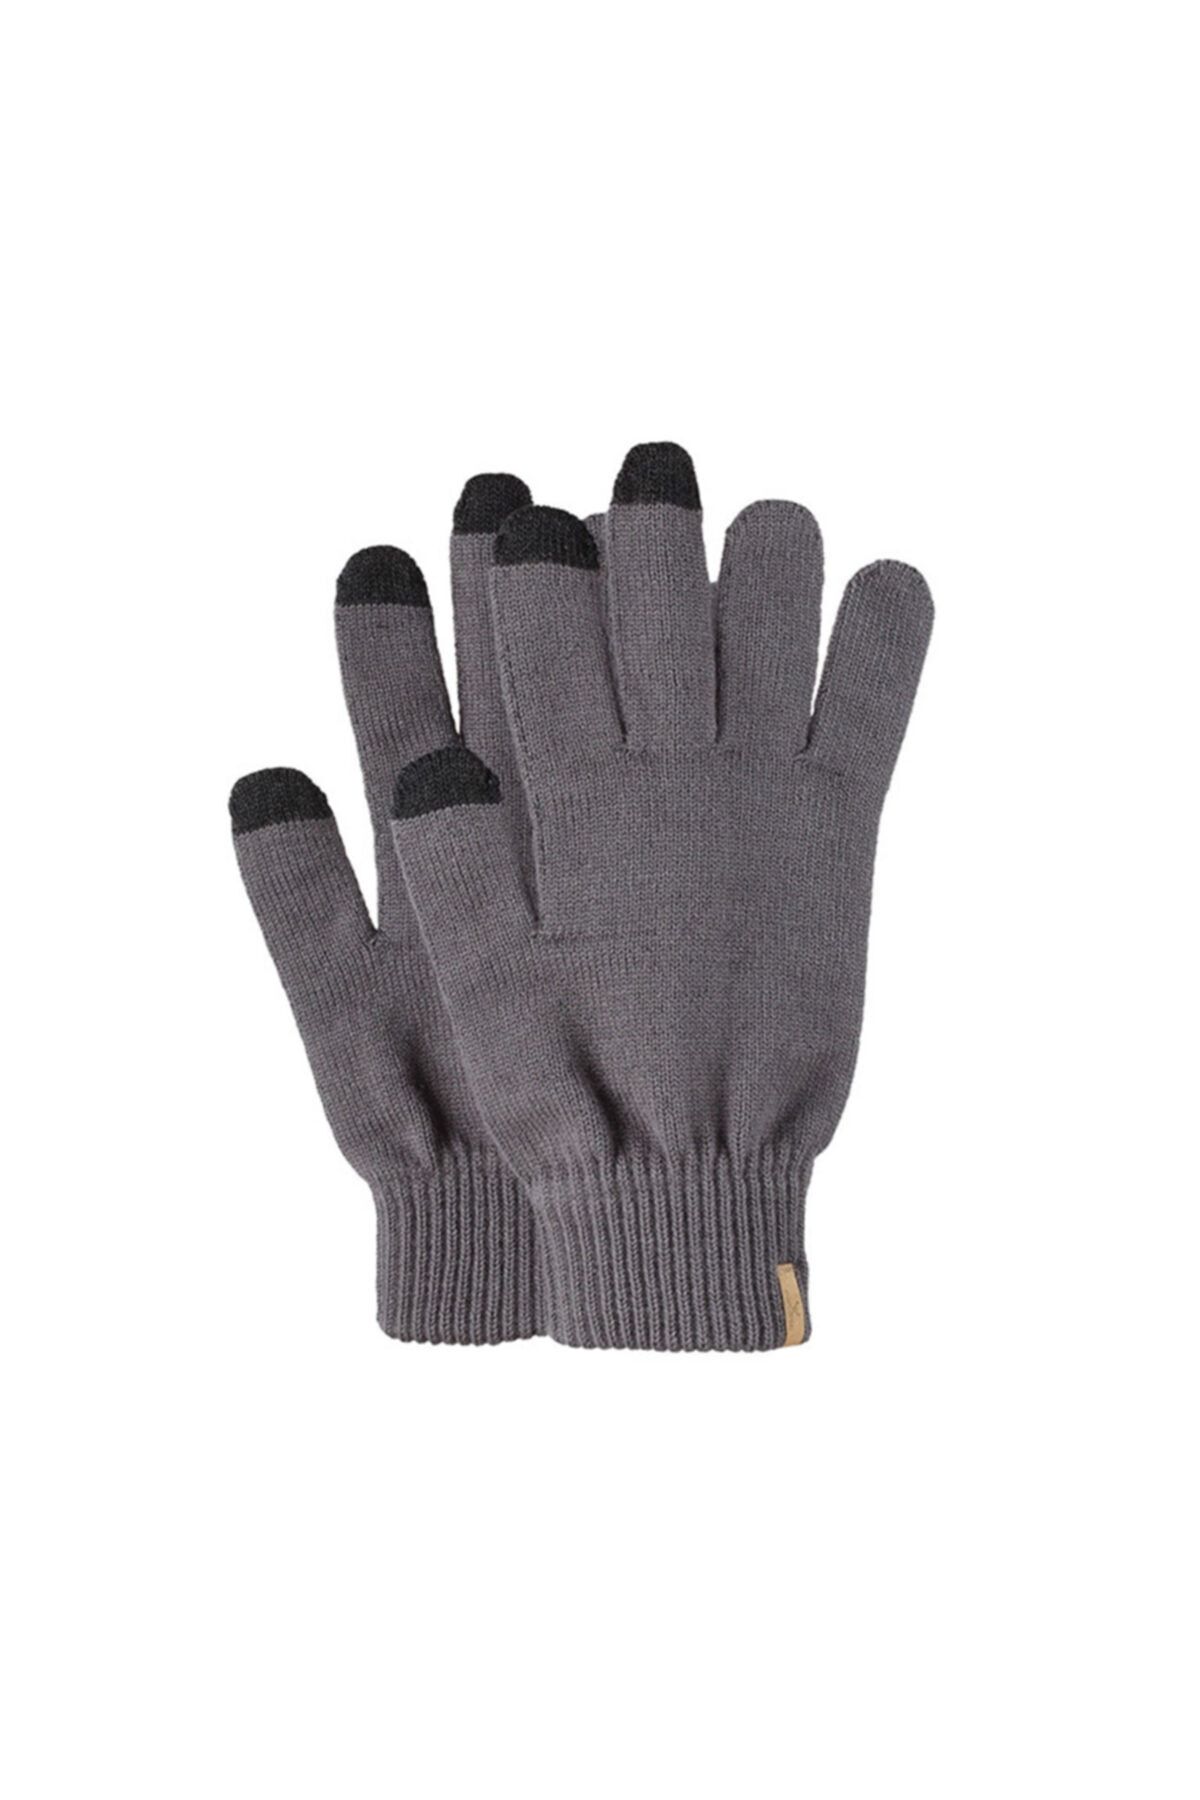 Nordbron Unisex Gri Microfleece Gloves Eldiven